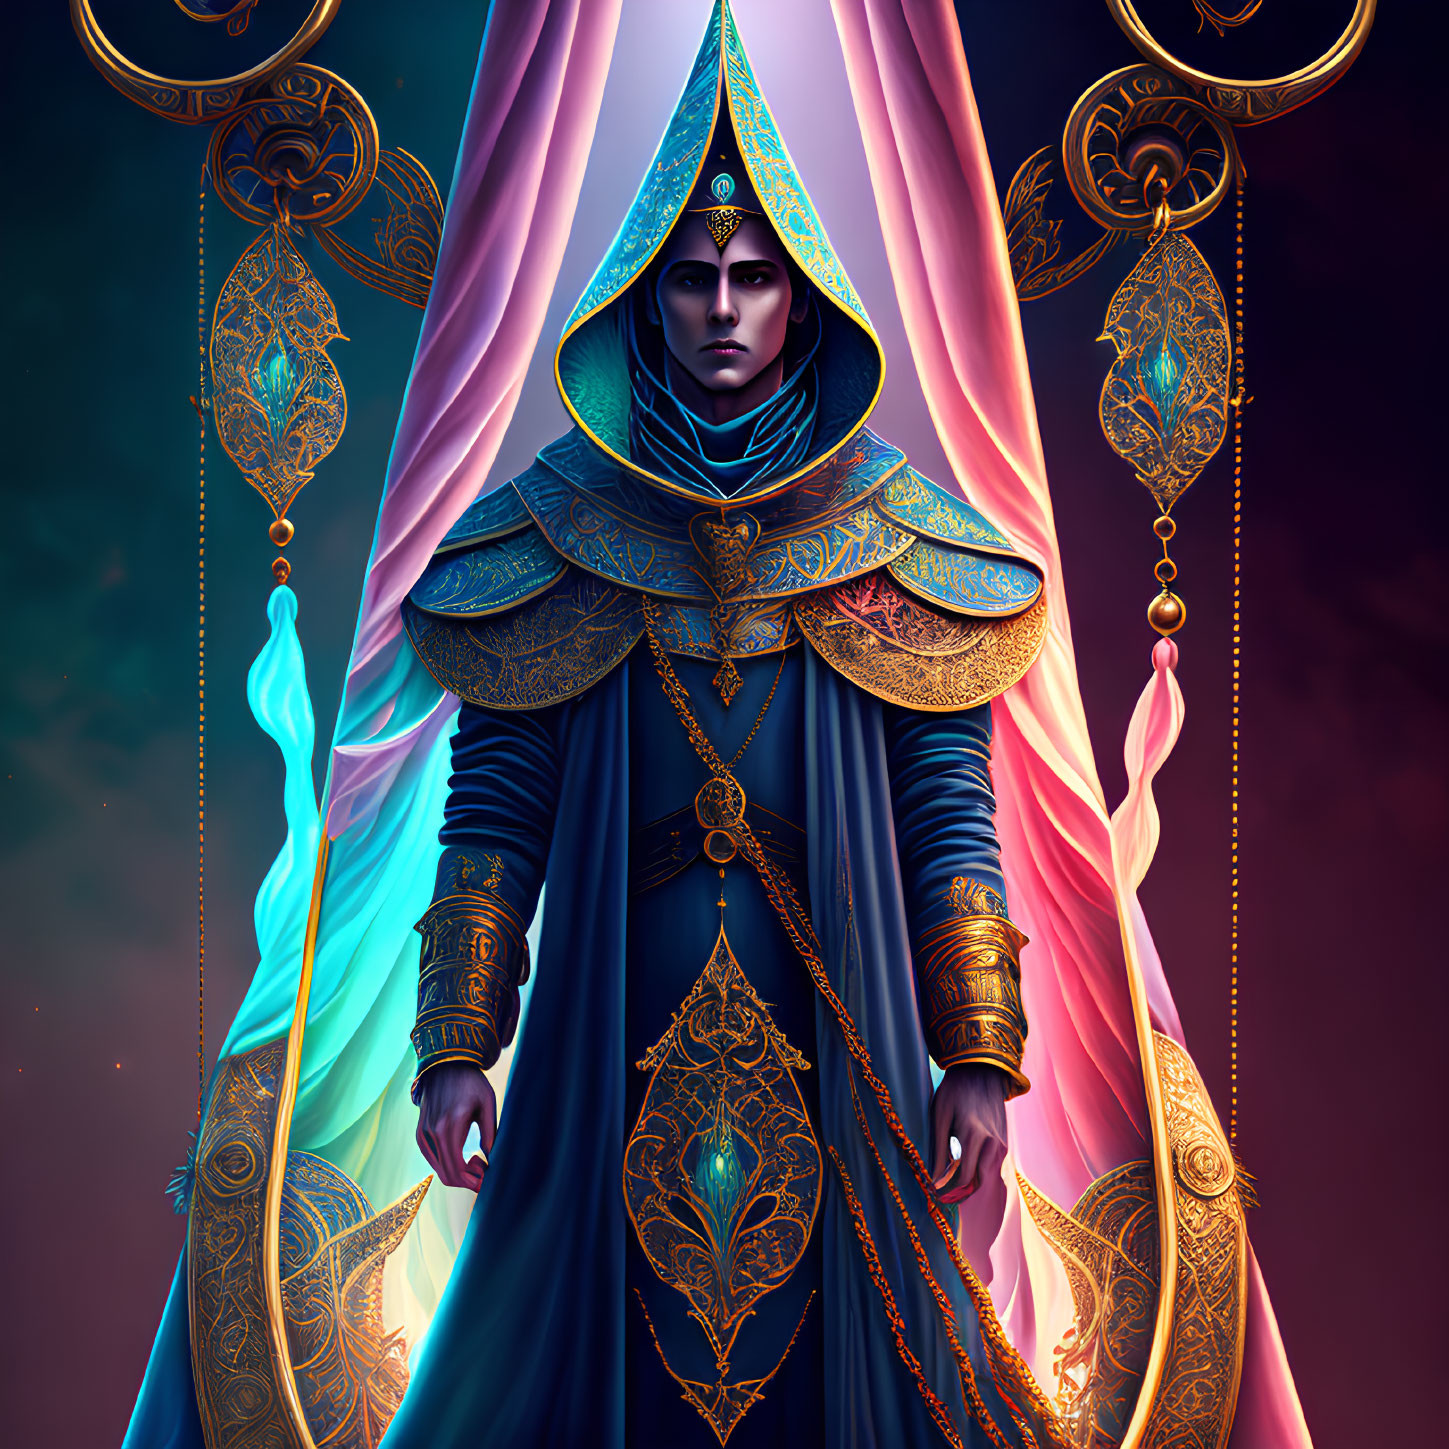 Regal Figure in Blue and Gold Cloak on Mystical Background